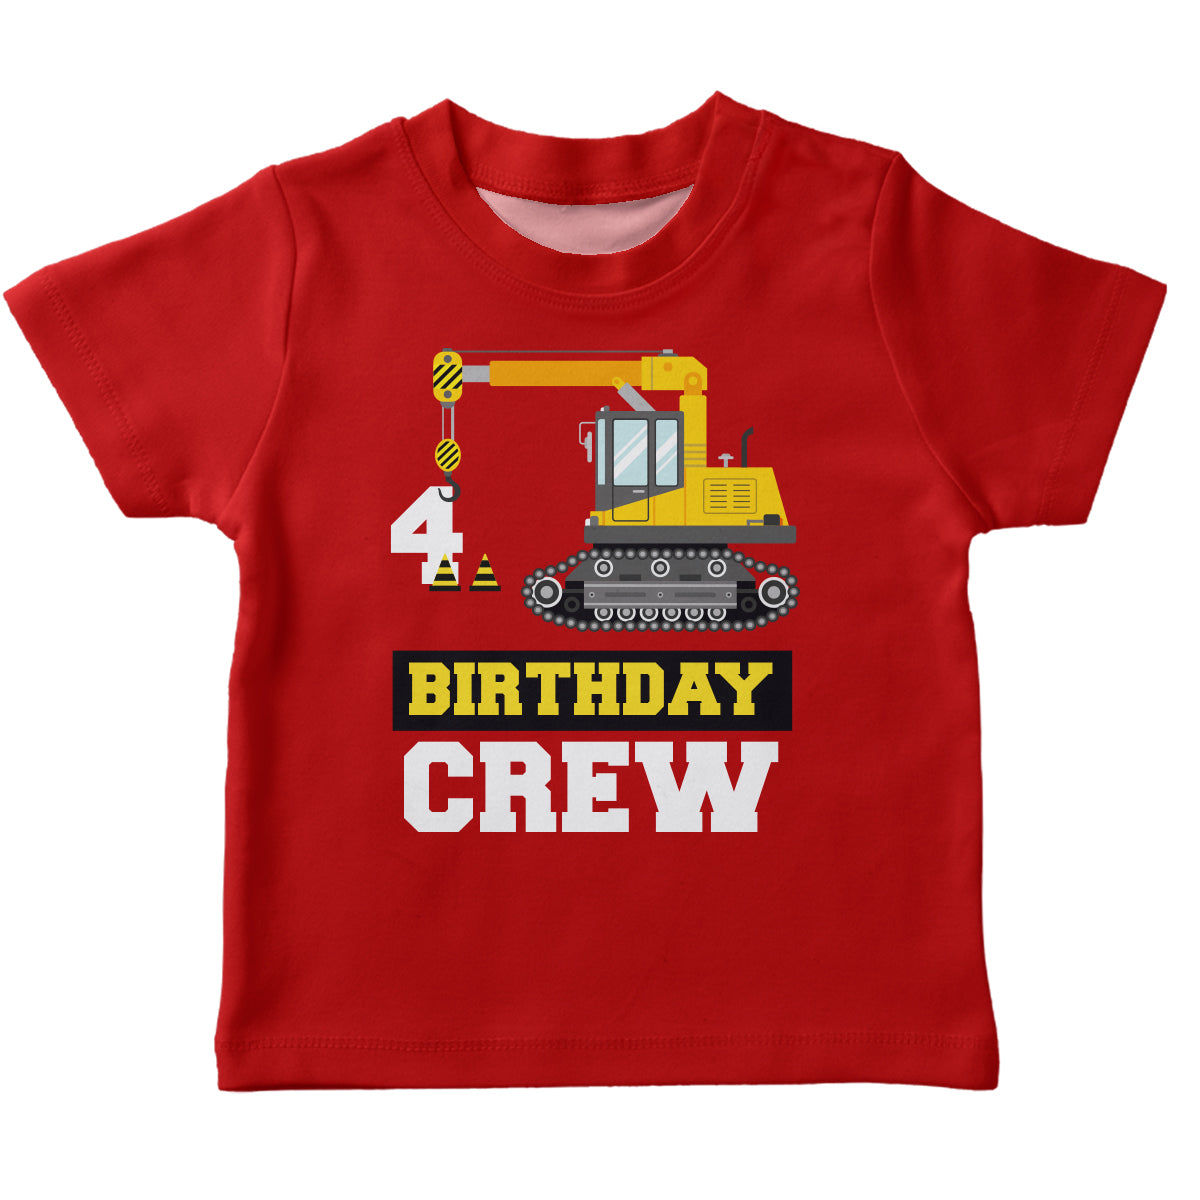 Red birthday crew short sleeve boys tee shirt - Wimziy&Co.